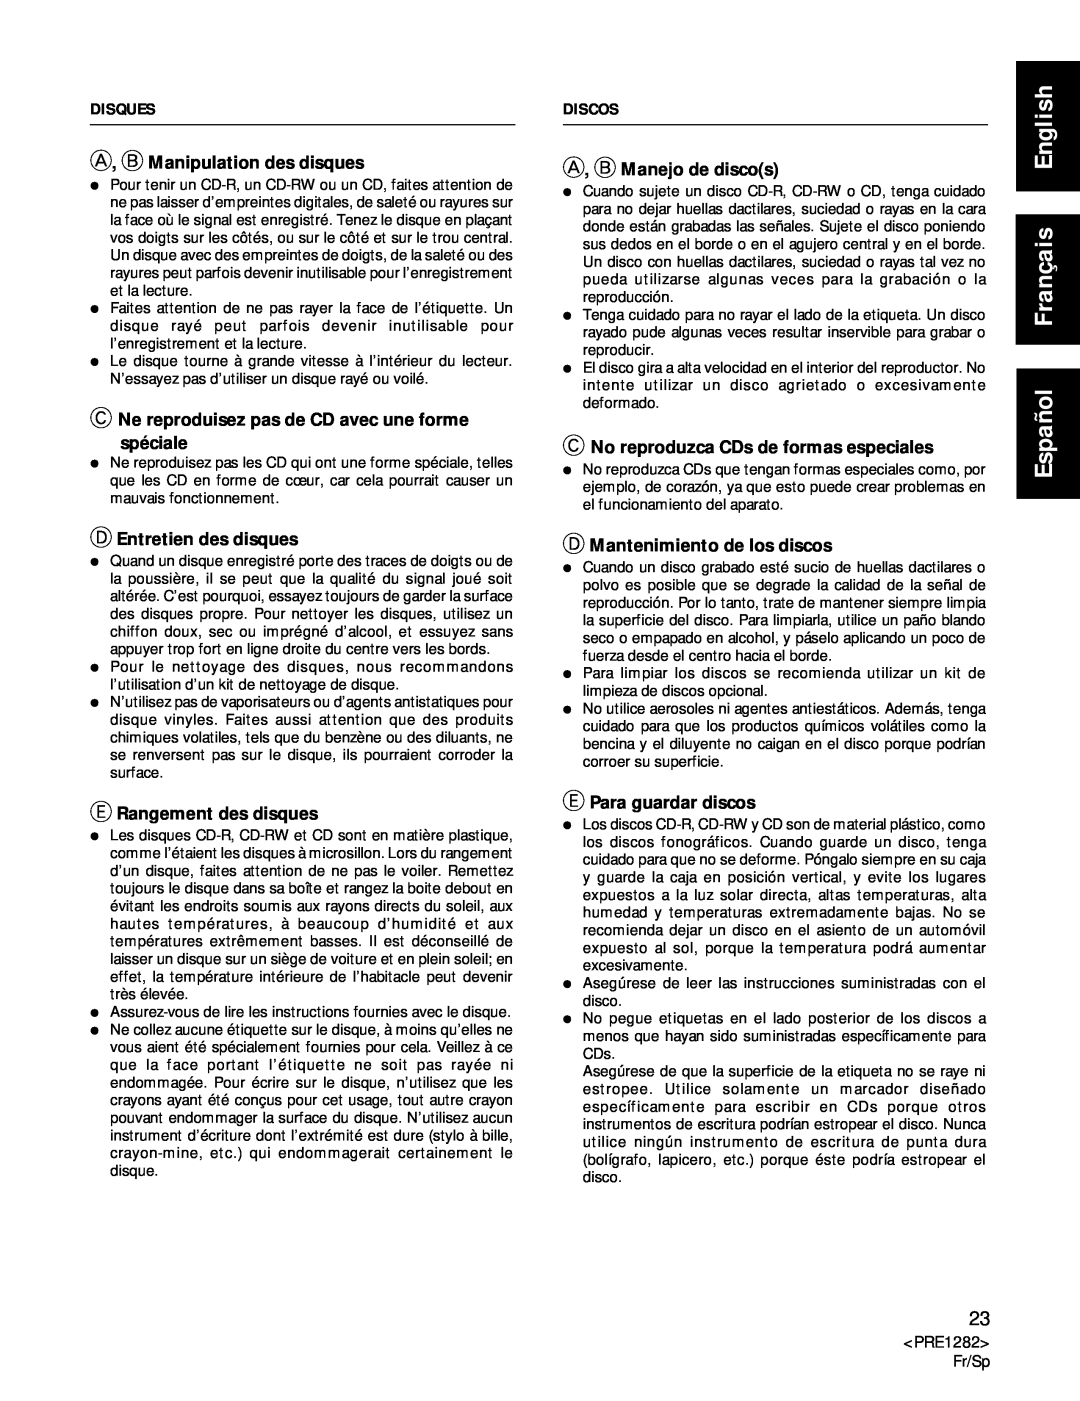 Americana Appliances CDR-850 manual Español Français English, A, B Manipulation des disques, DEntretien des disques 